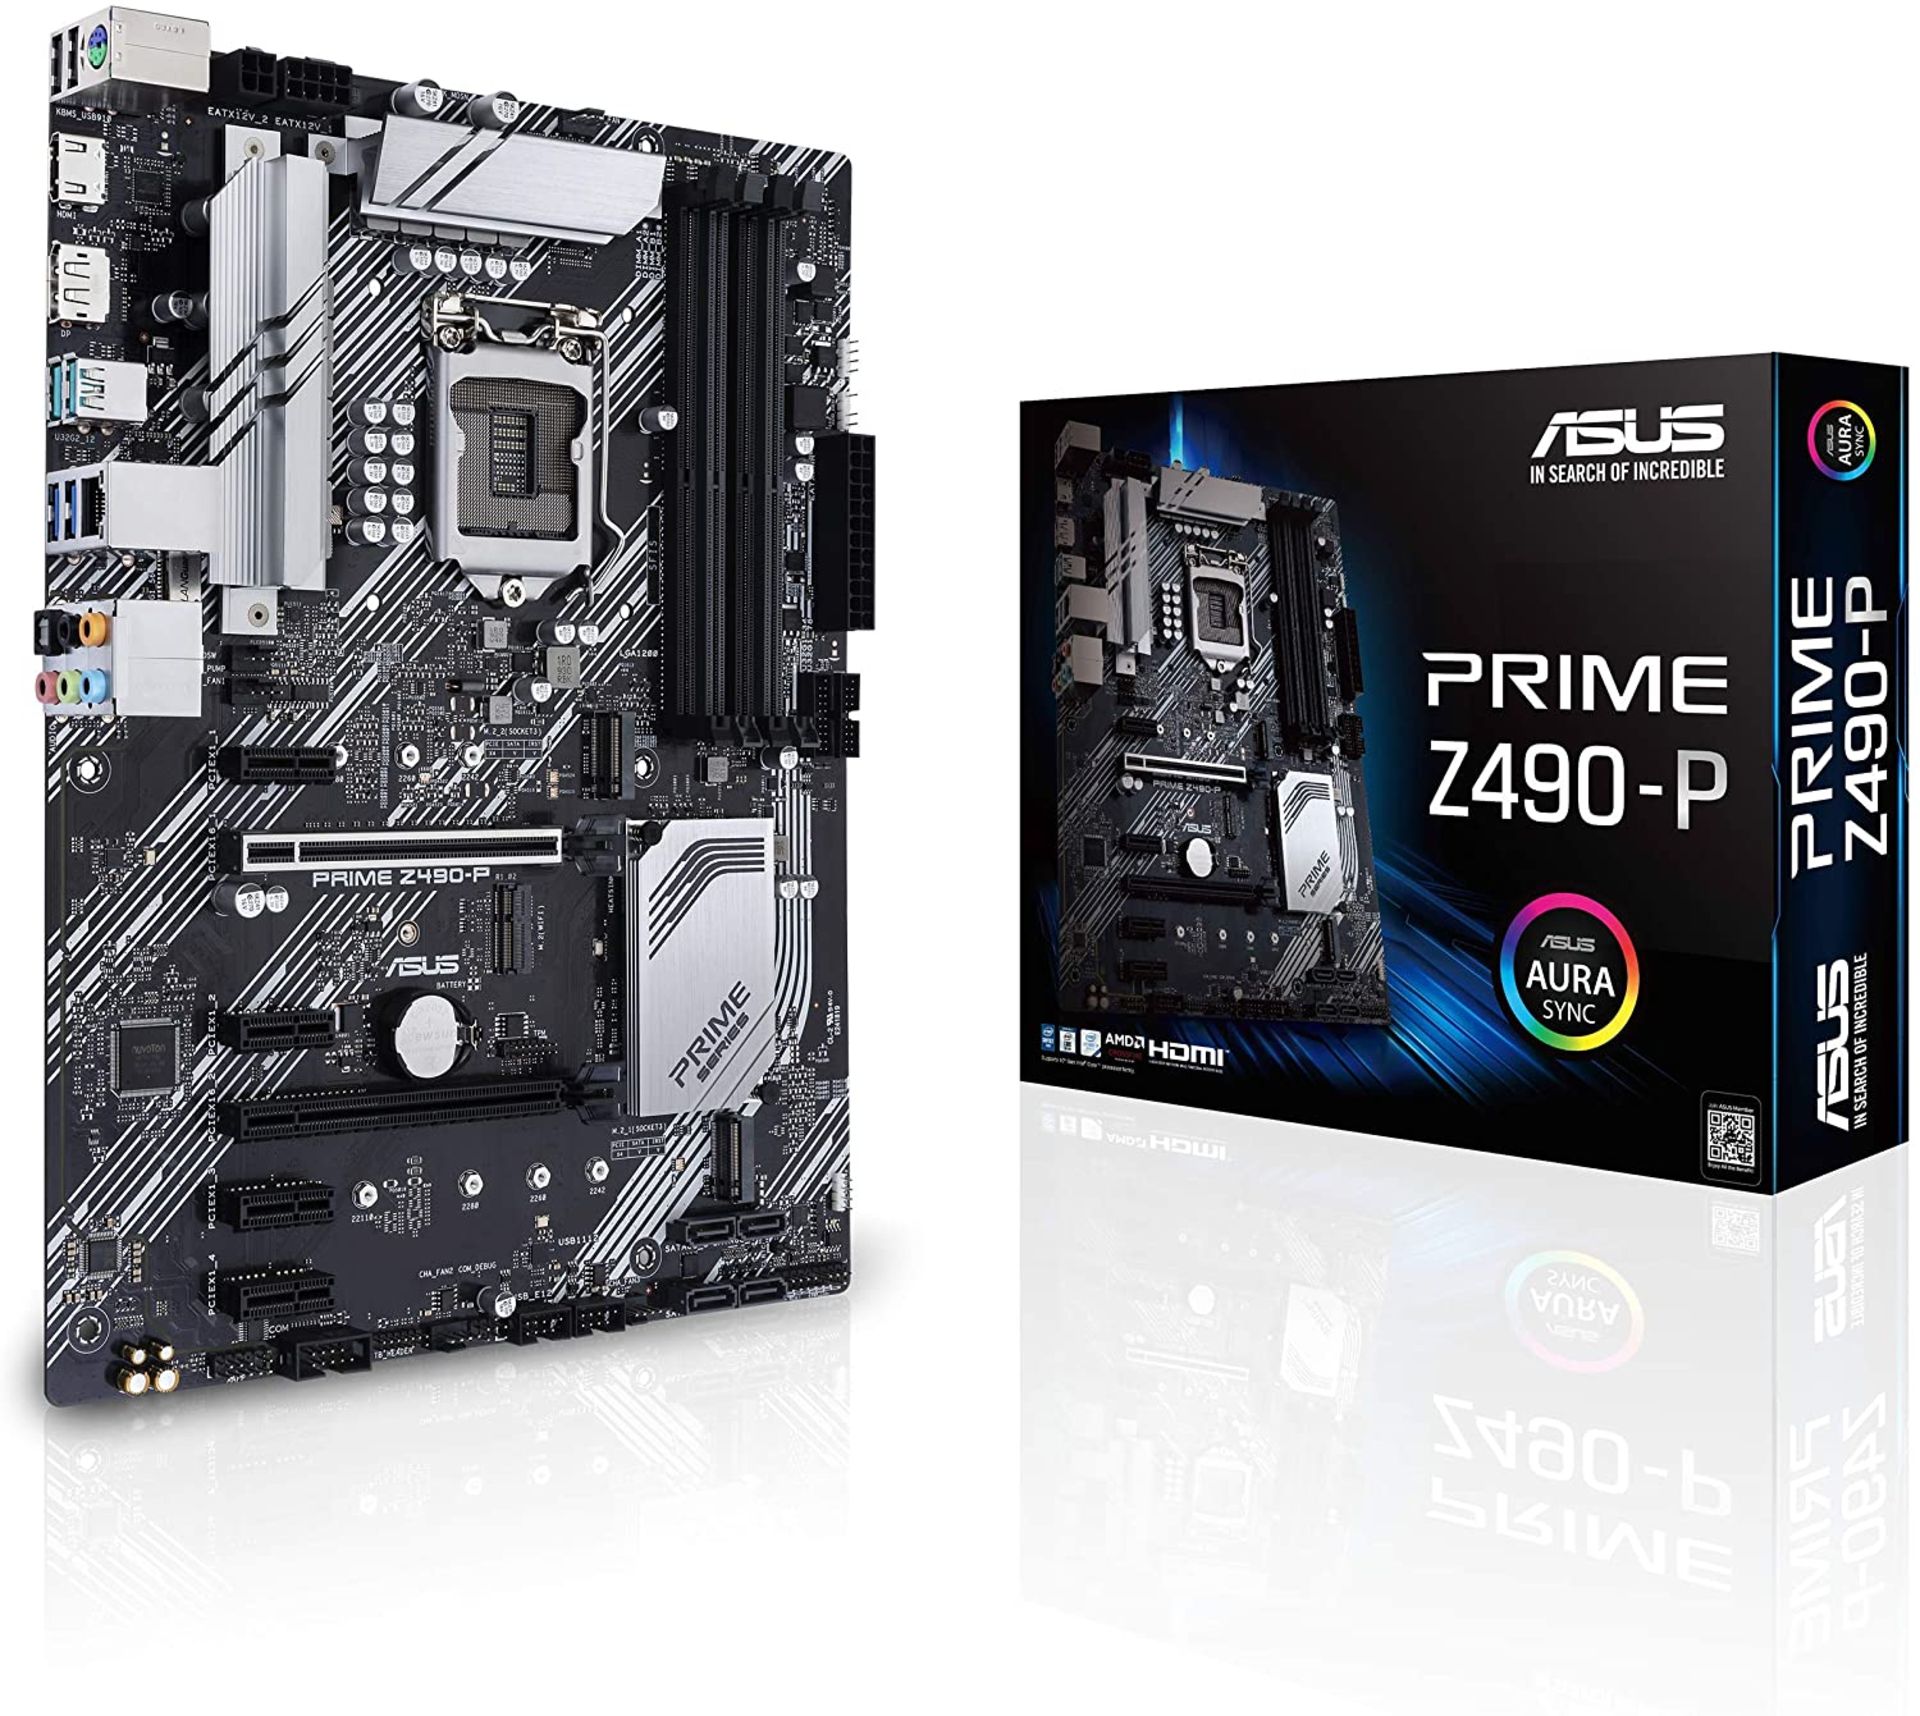 ASUS Prime Z490-P Intel Z490 LGA 1200, Dual M.2, 11 DrMOS Power Stages, DDR4 4600, 1 GB Ethernet, HD